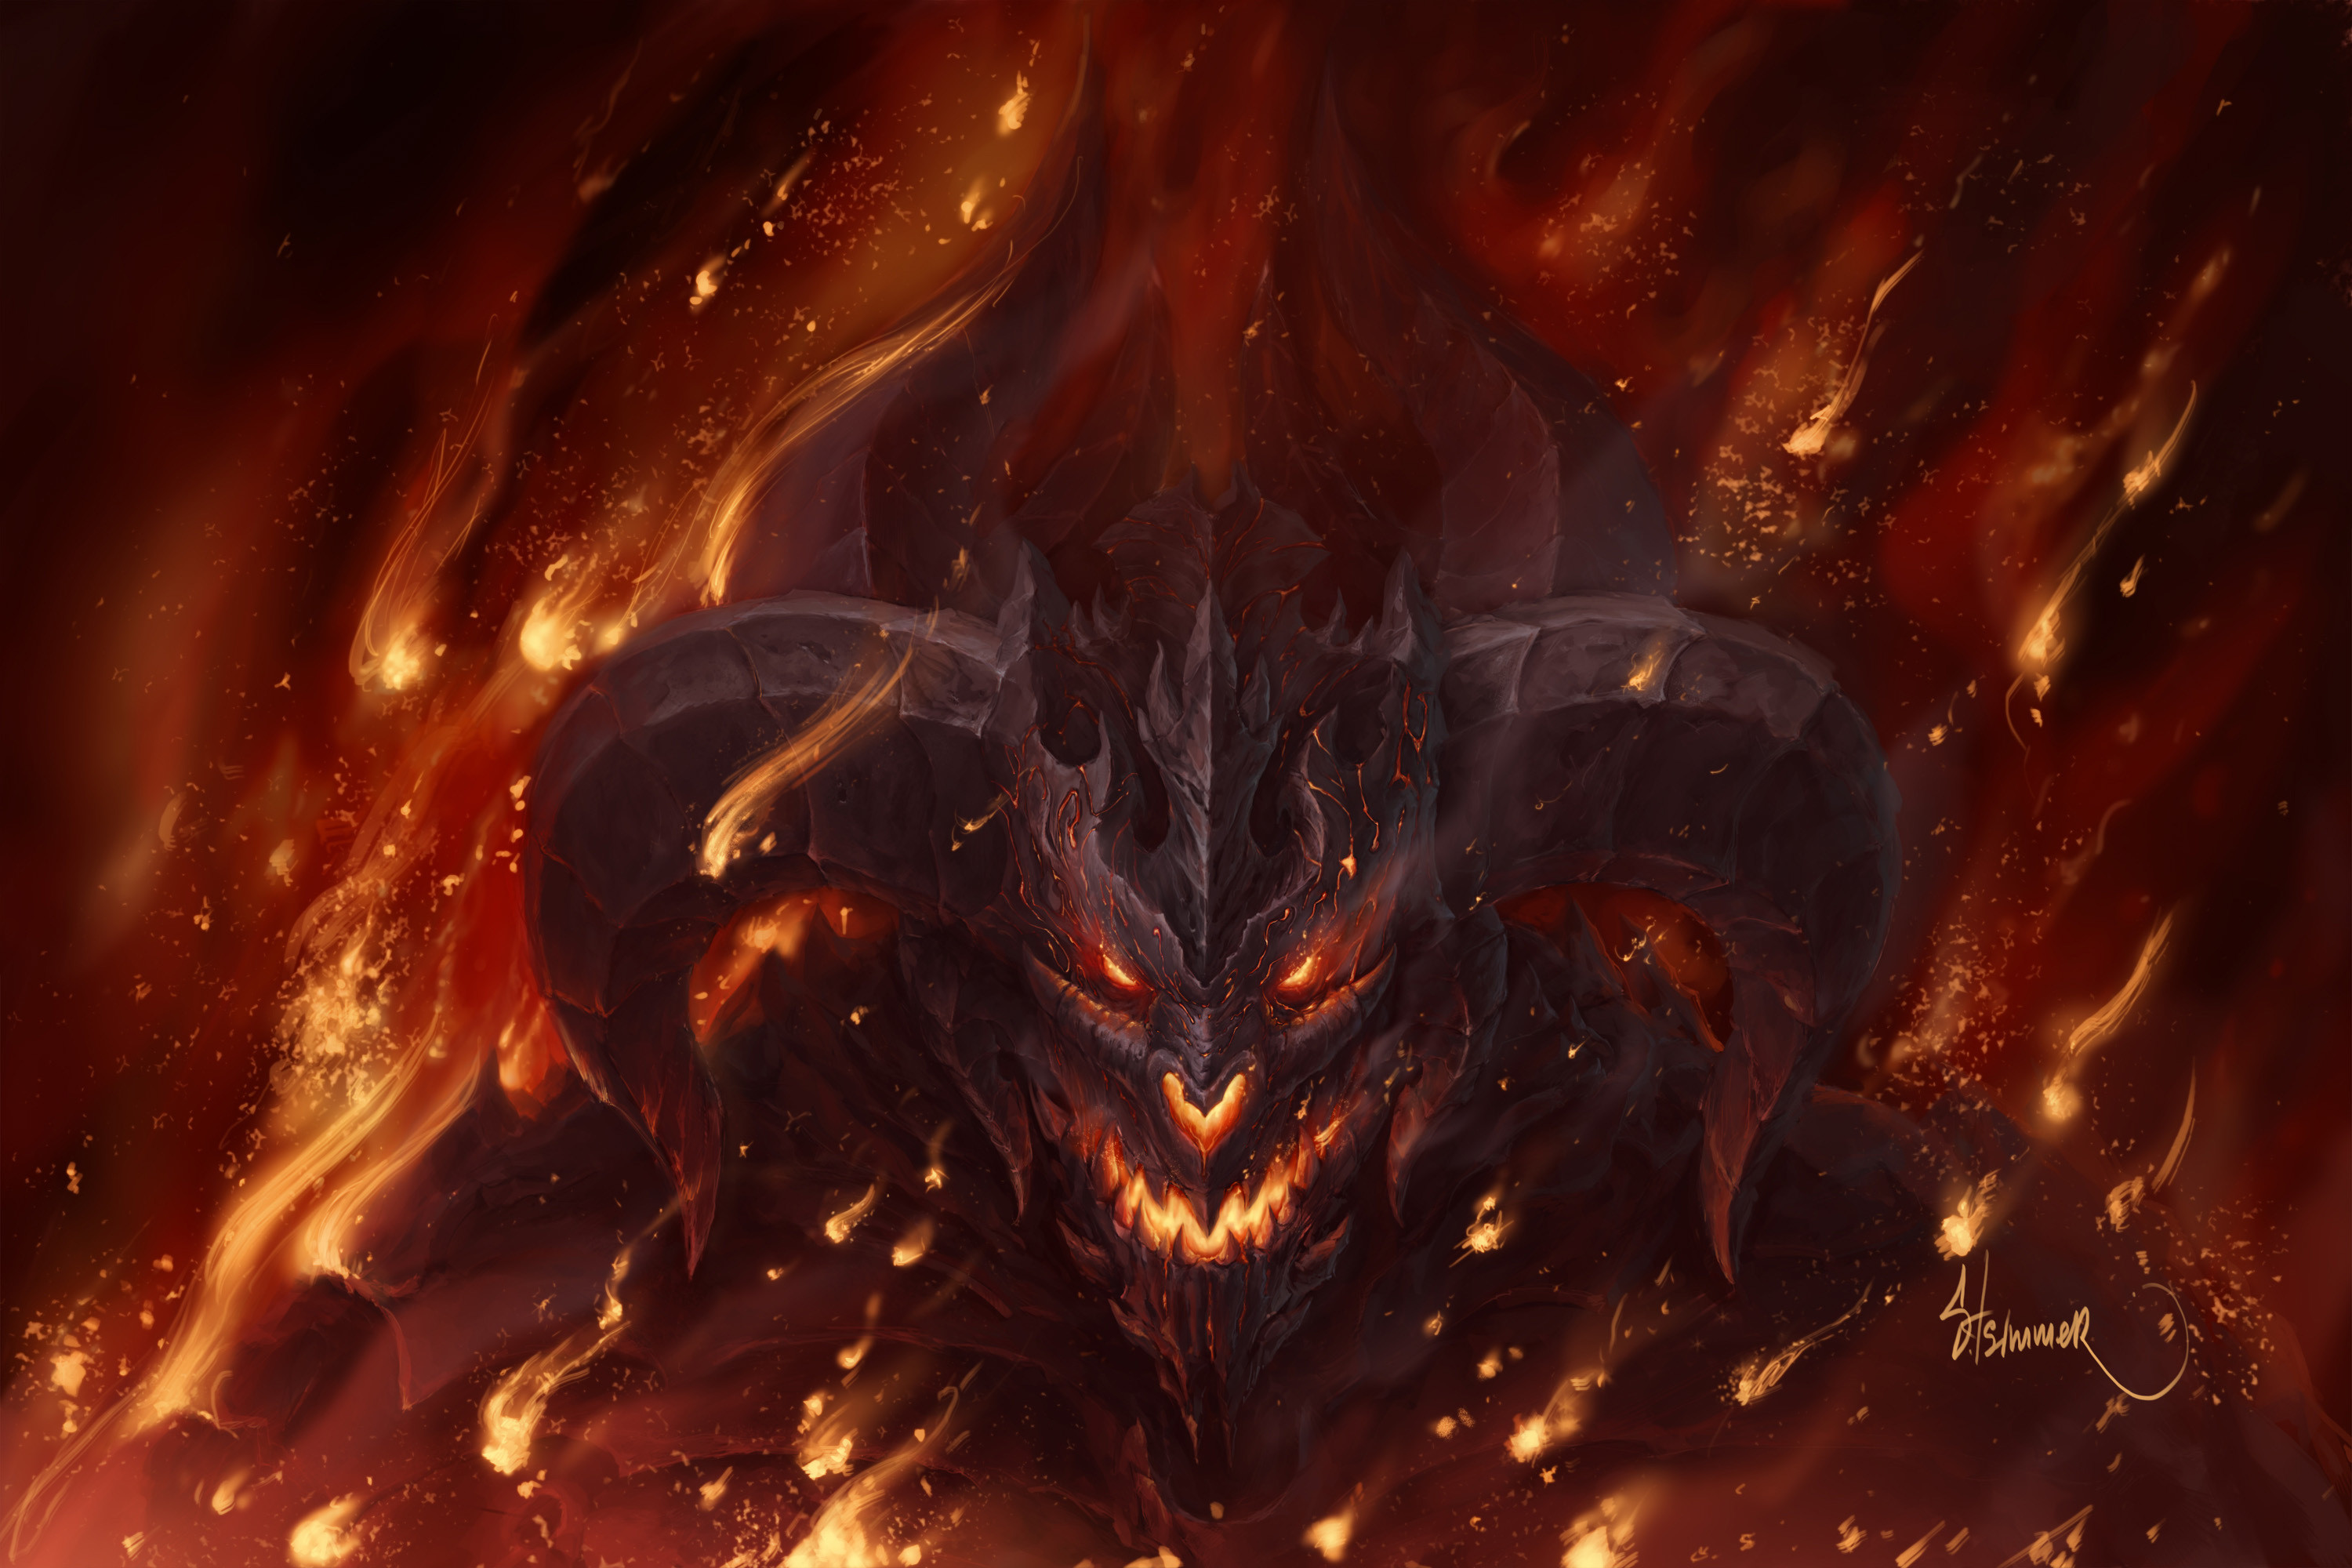 Fire Demon Wallpaper For Desktop Wallpaper 3000 x 2000 px MB shadow demoness hell fire angels wolf iphone dragon